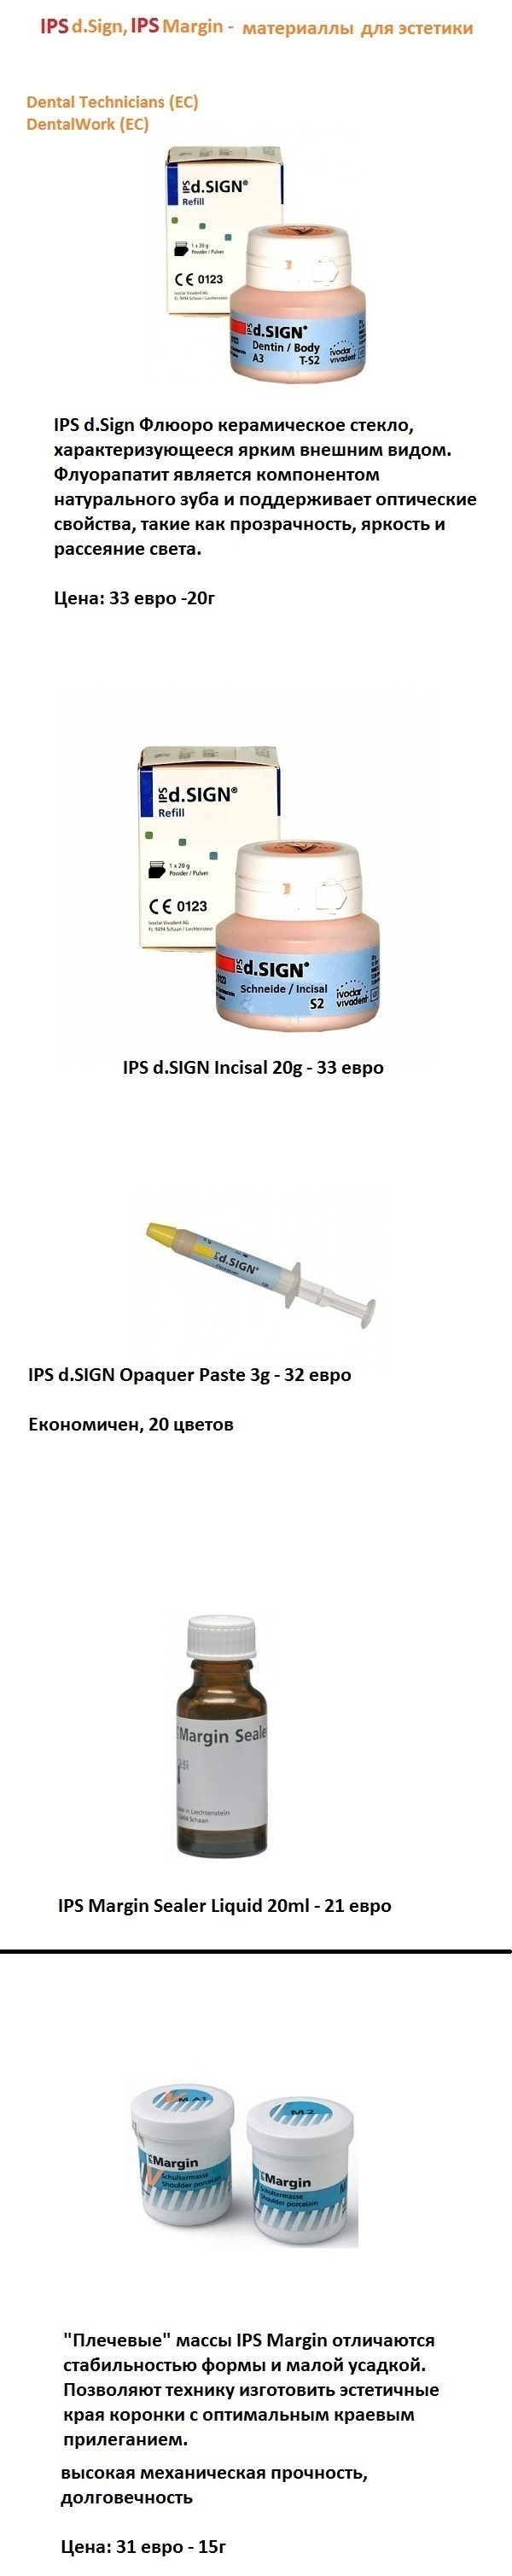 IPS & Press esthetic veneer. Smile Rx, Novodenta...IPS d.Sign, IPS Margin, IPS Classic Opal Incisal,VITA Cerec Powder Zooble.com.ua